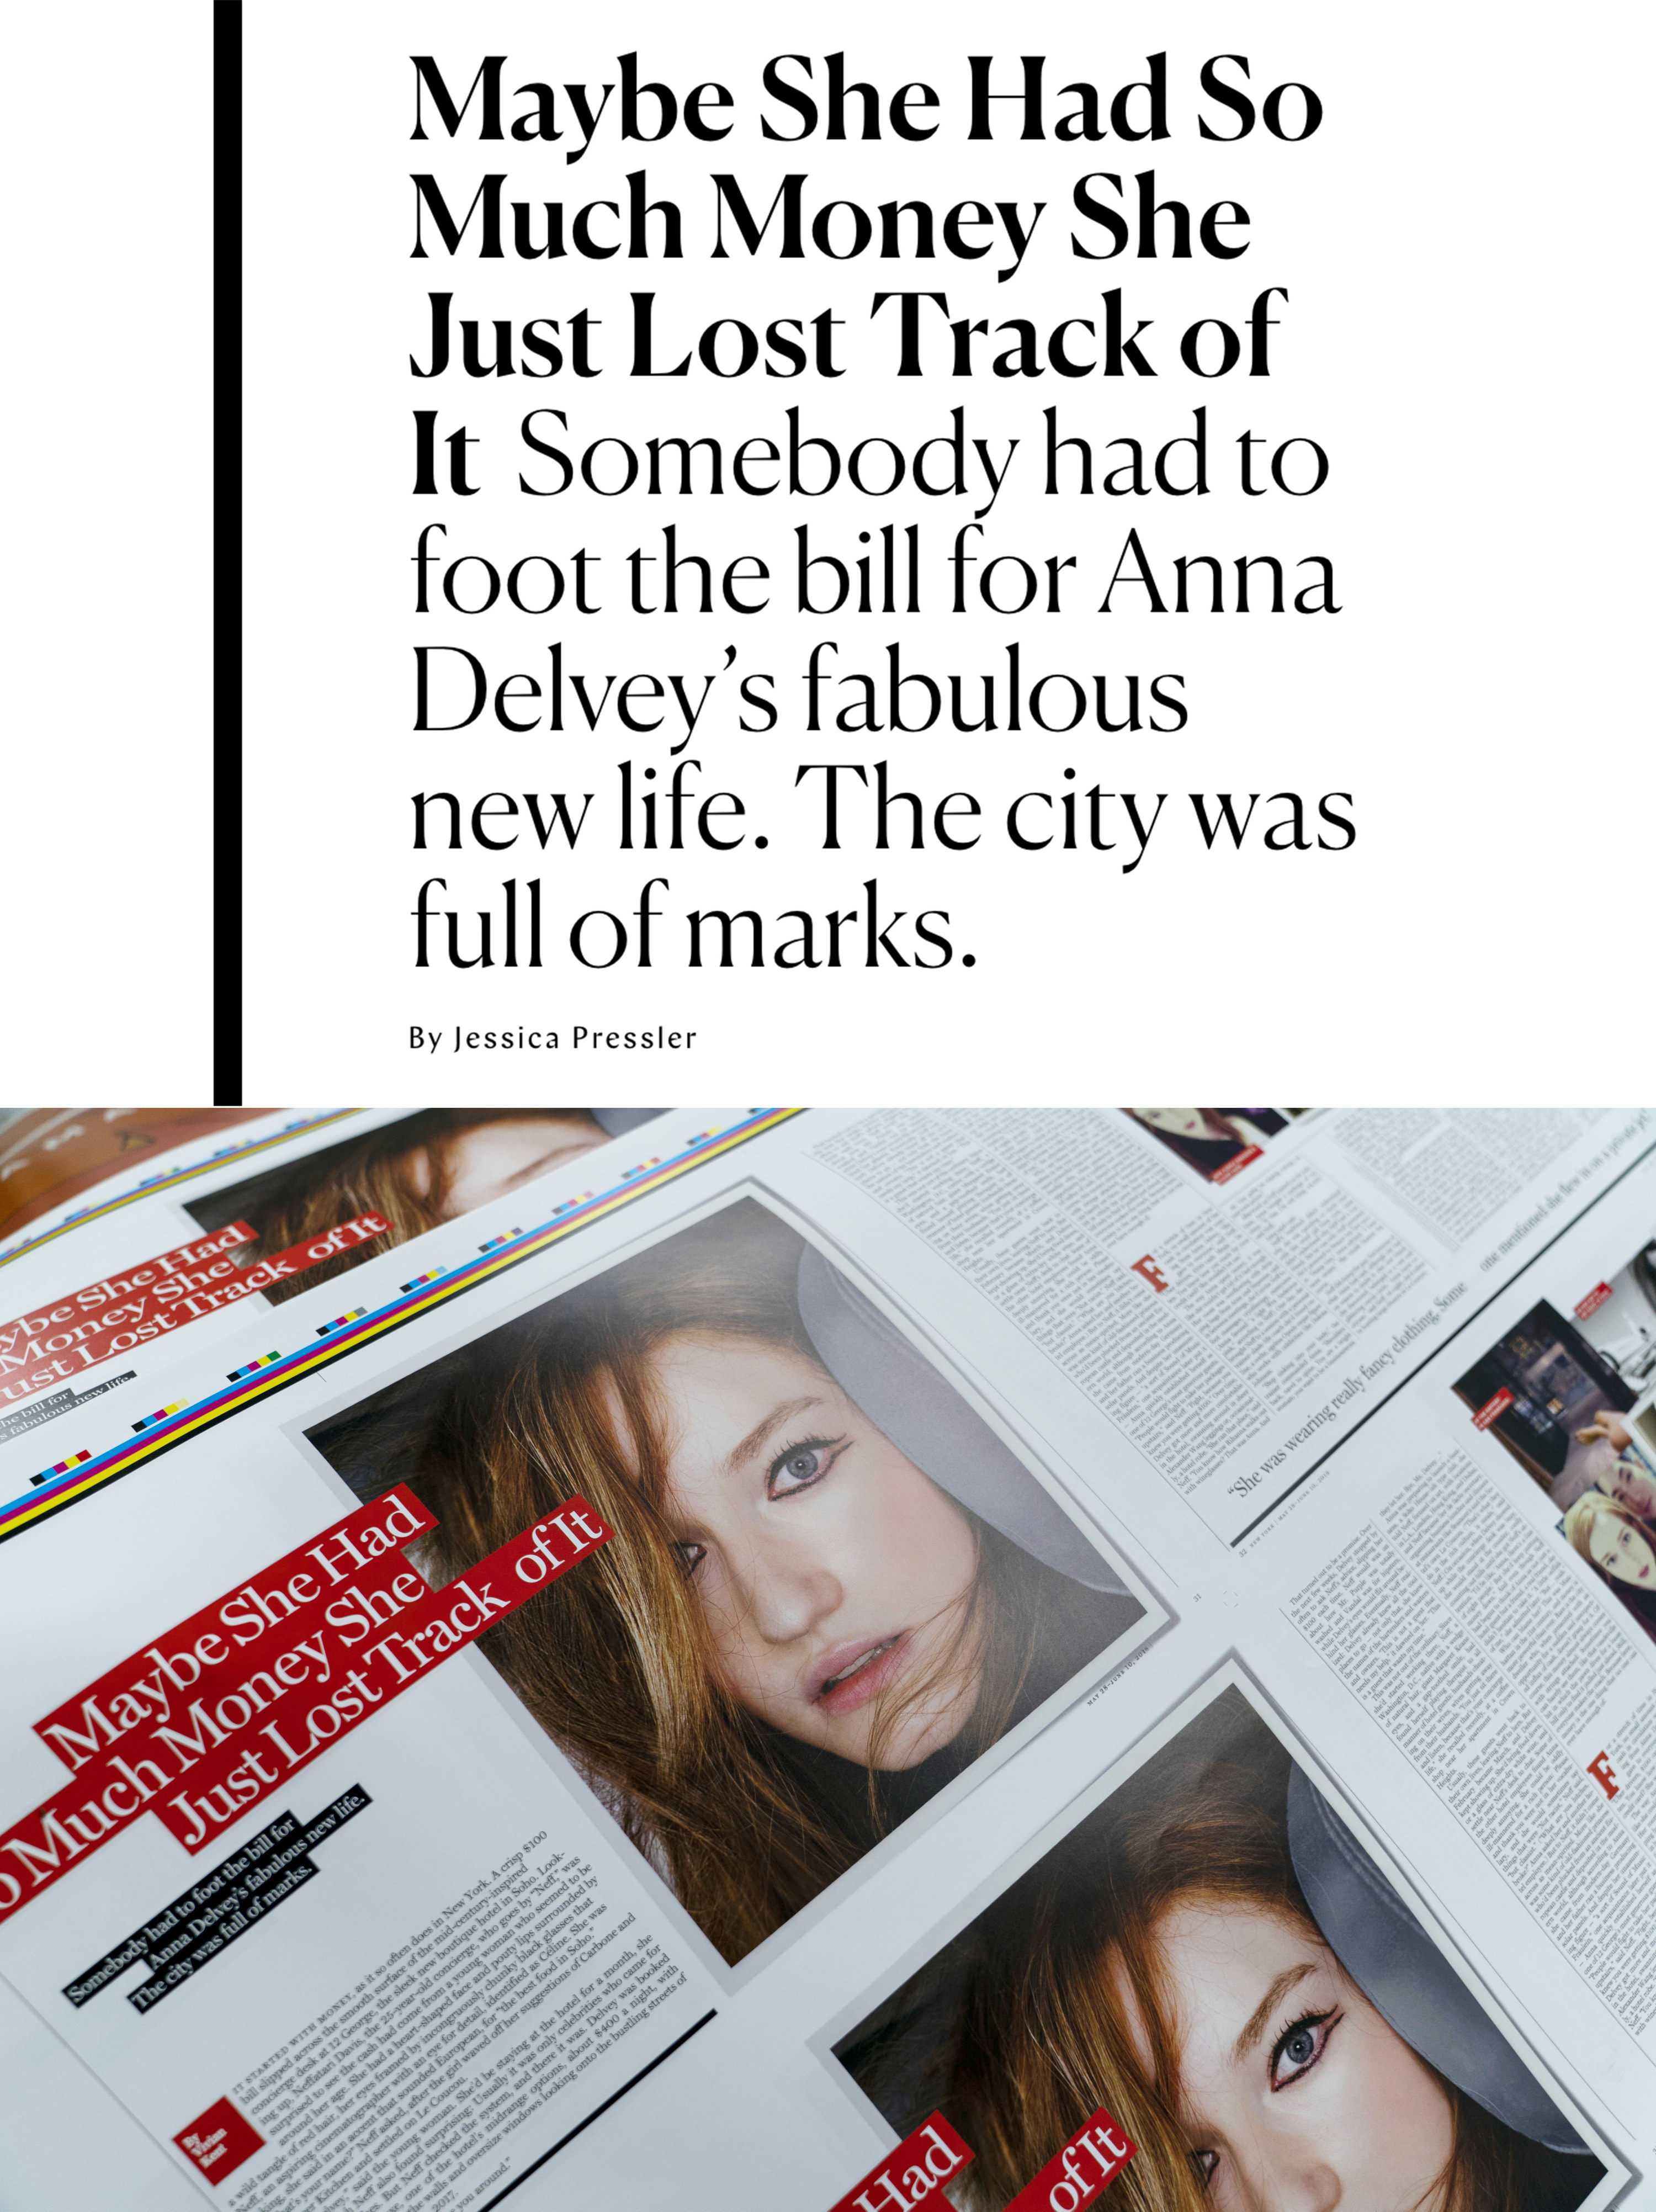 Jessica Pressler&#x27;s headline vs. Vivian&#x27;s headline in Inventing Anna